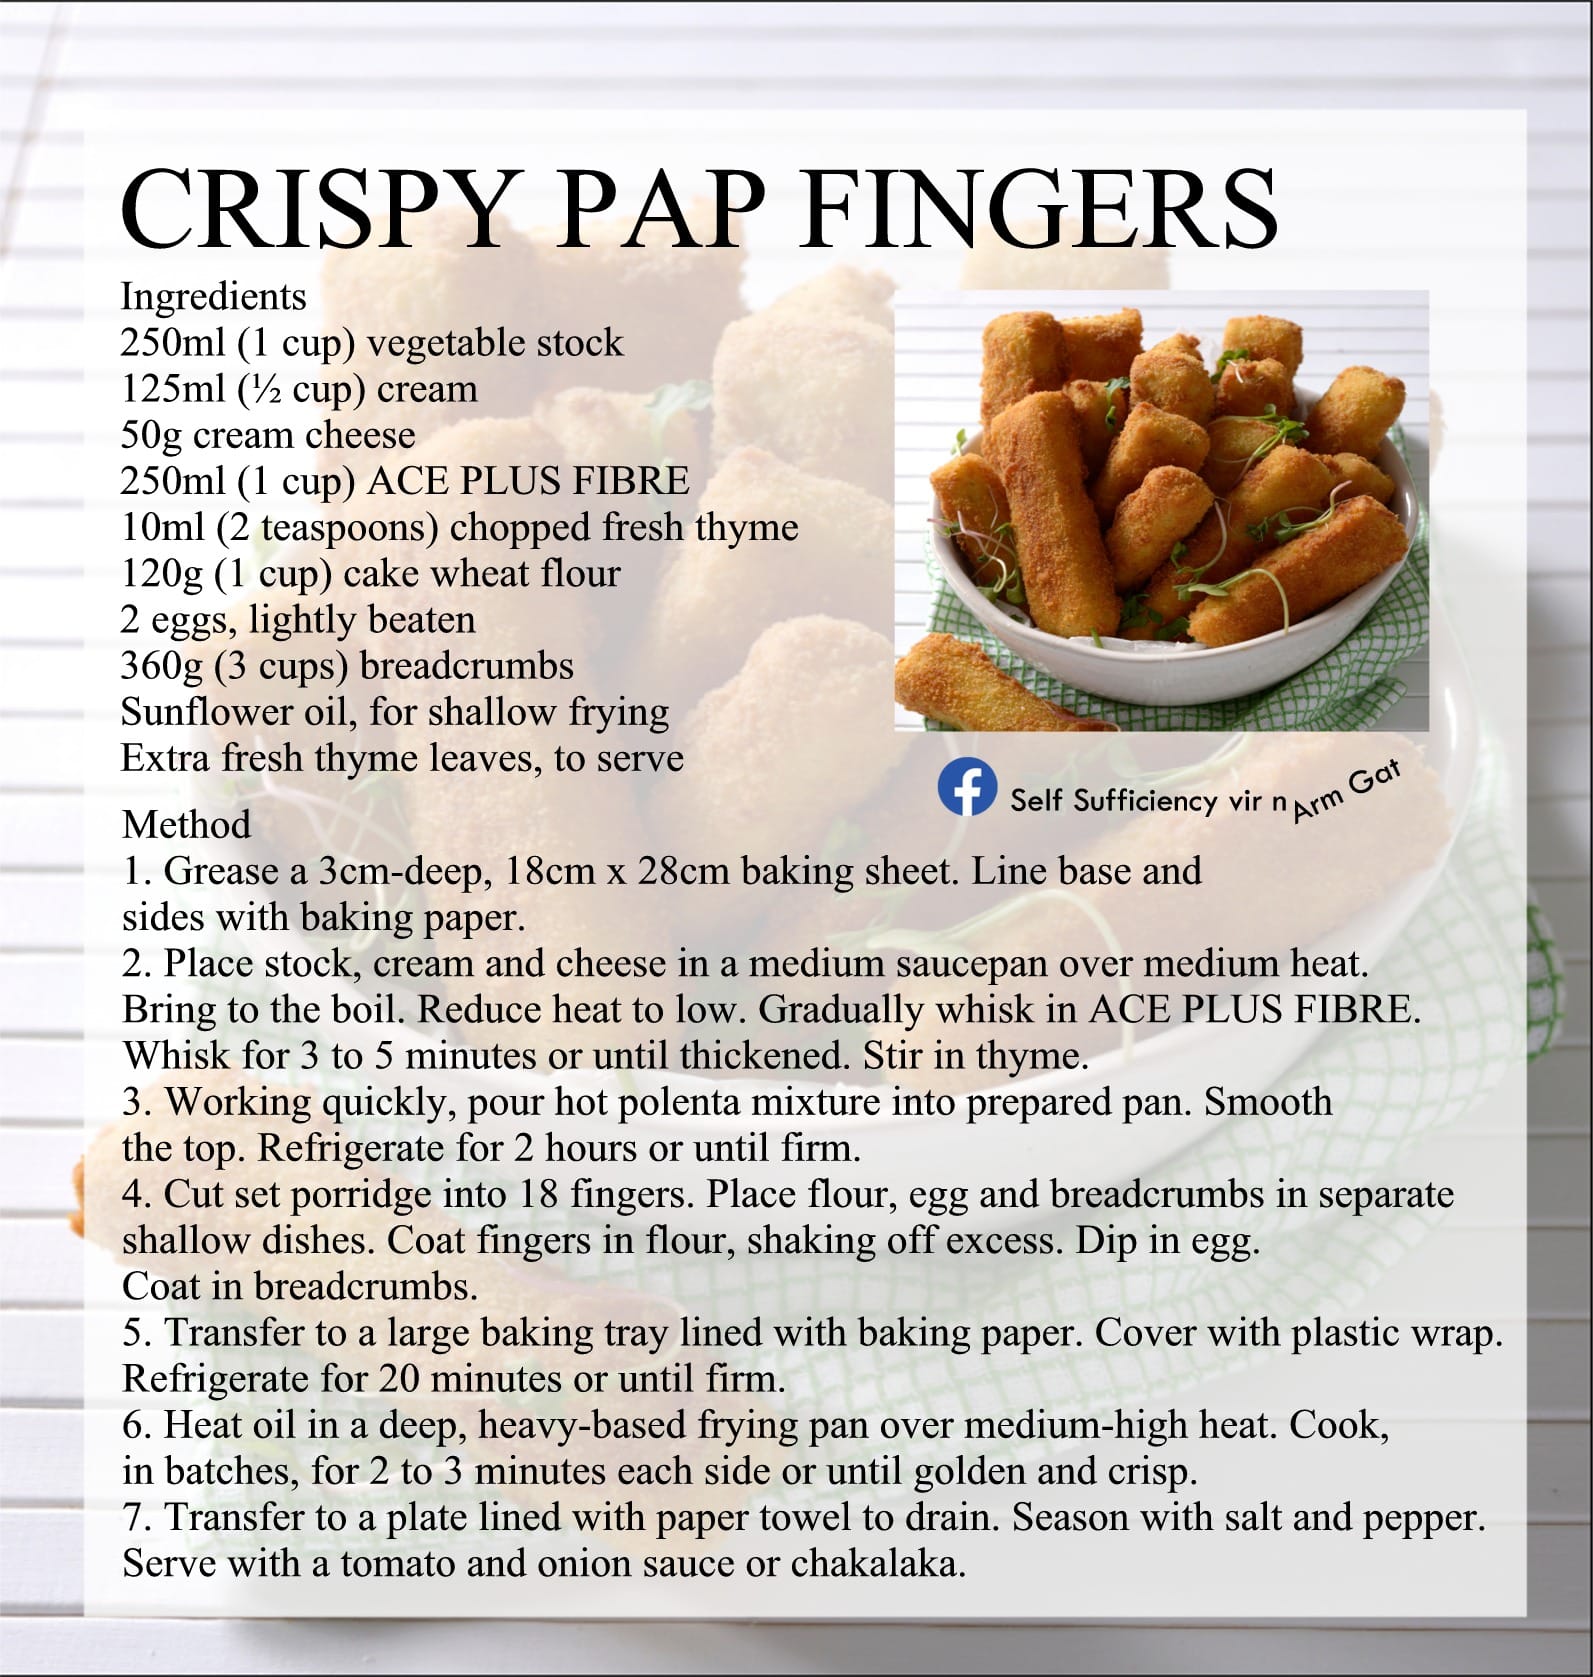 Crispy Pap Fingers